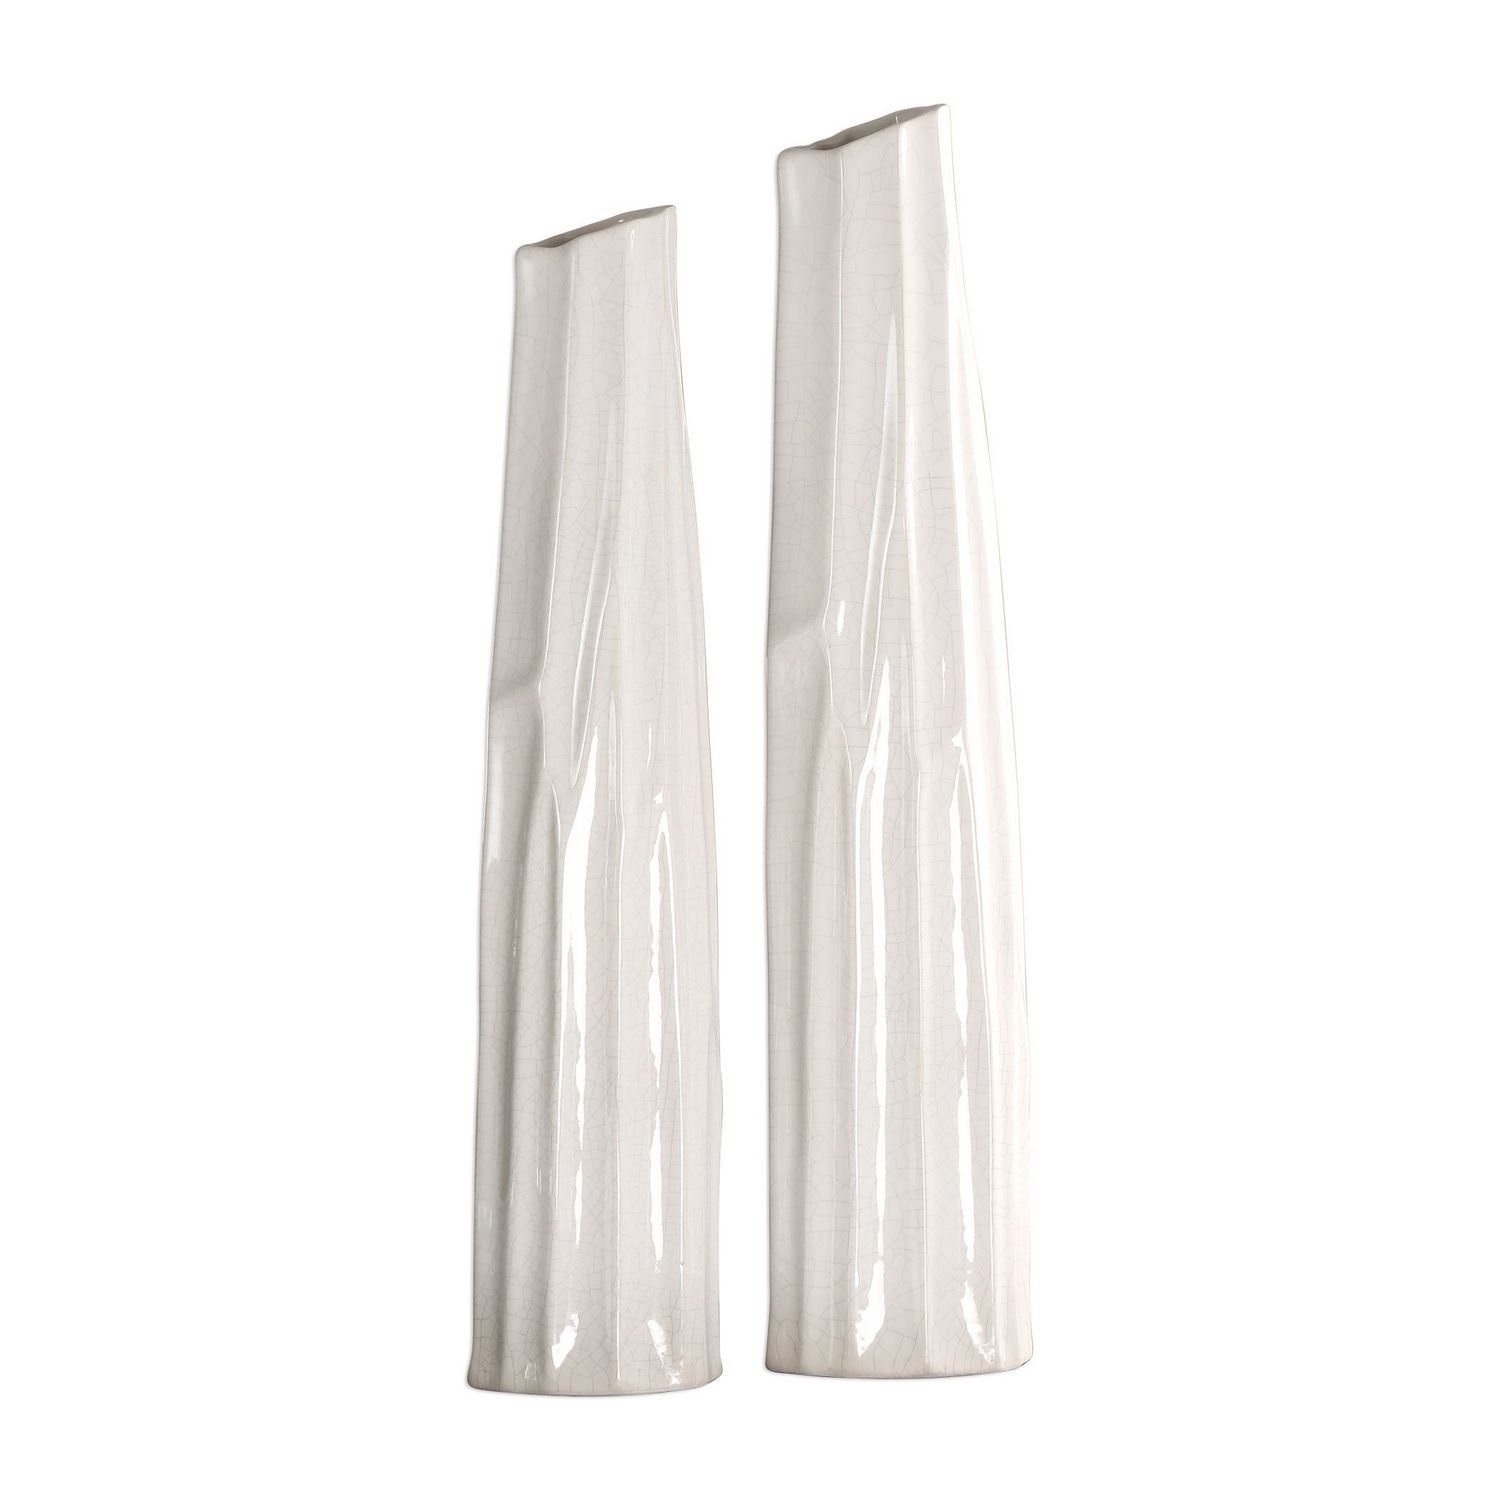 Uttermost Kenley Crackled Vases - Set of 2 - White